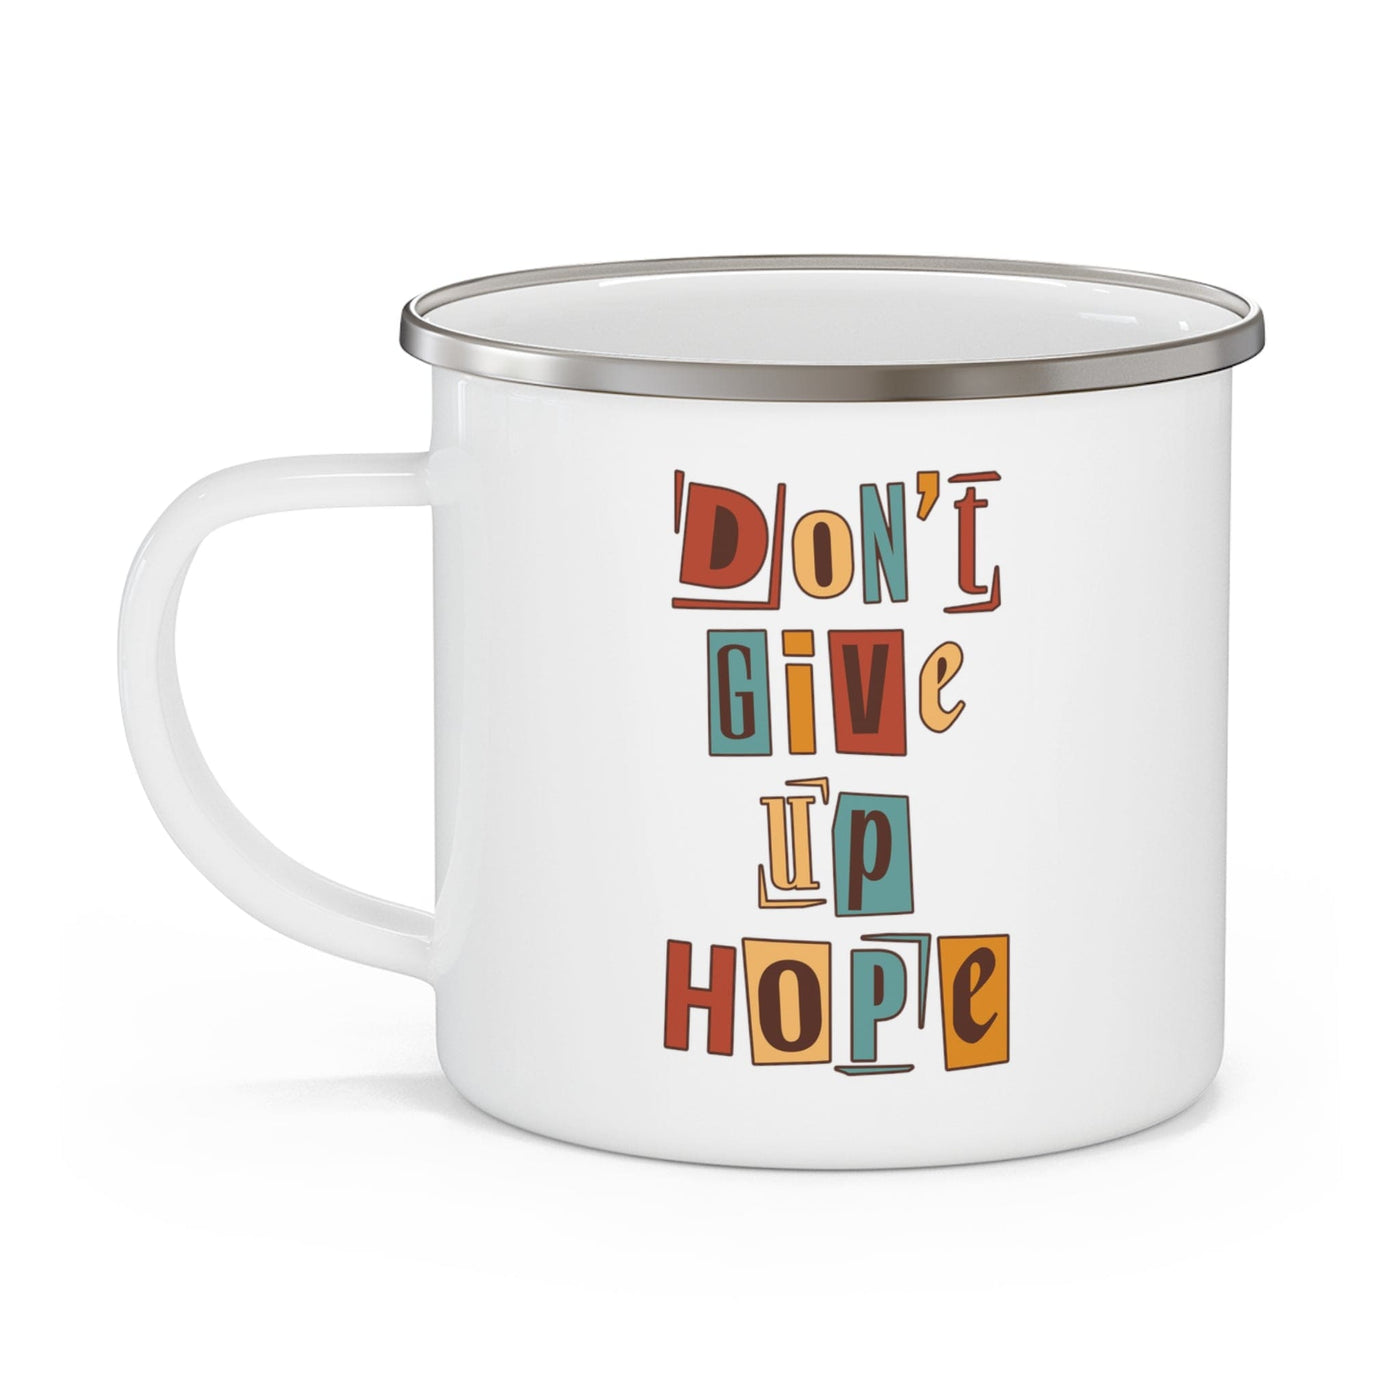 Enamel Camping Mug Say It Soul - Don’t Give Up Hope Inspiration Decorative